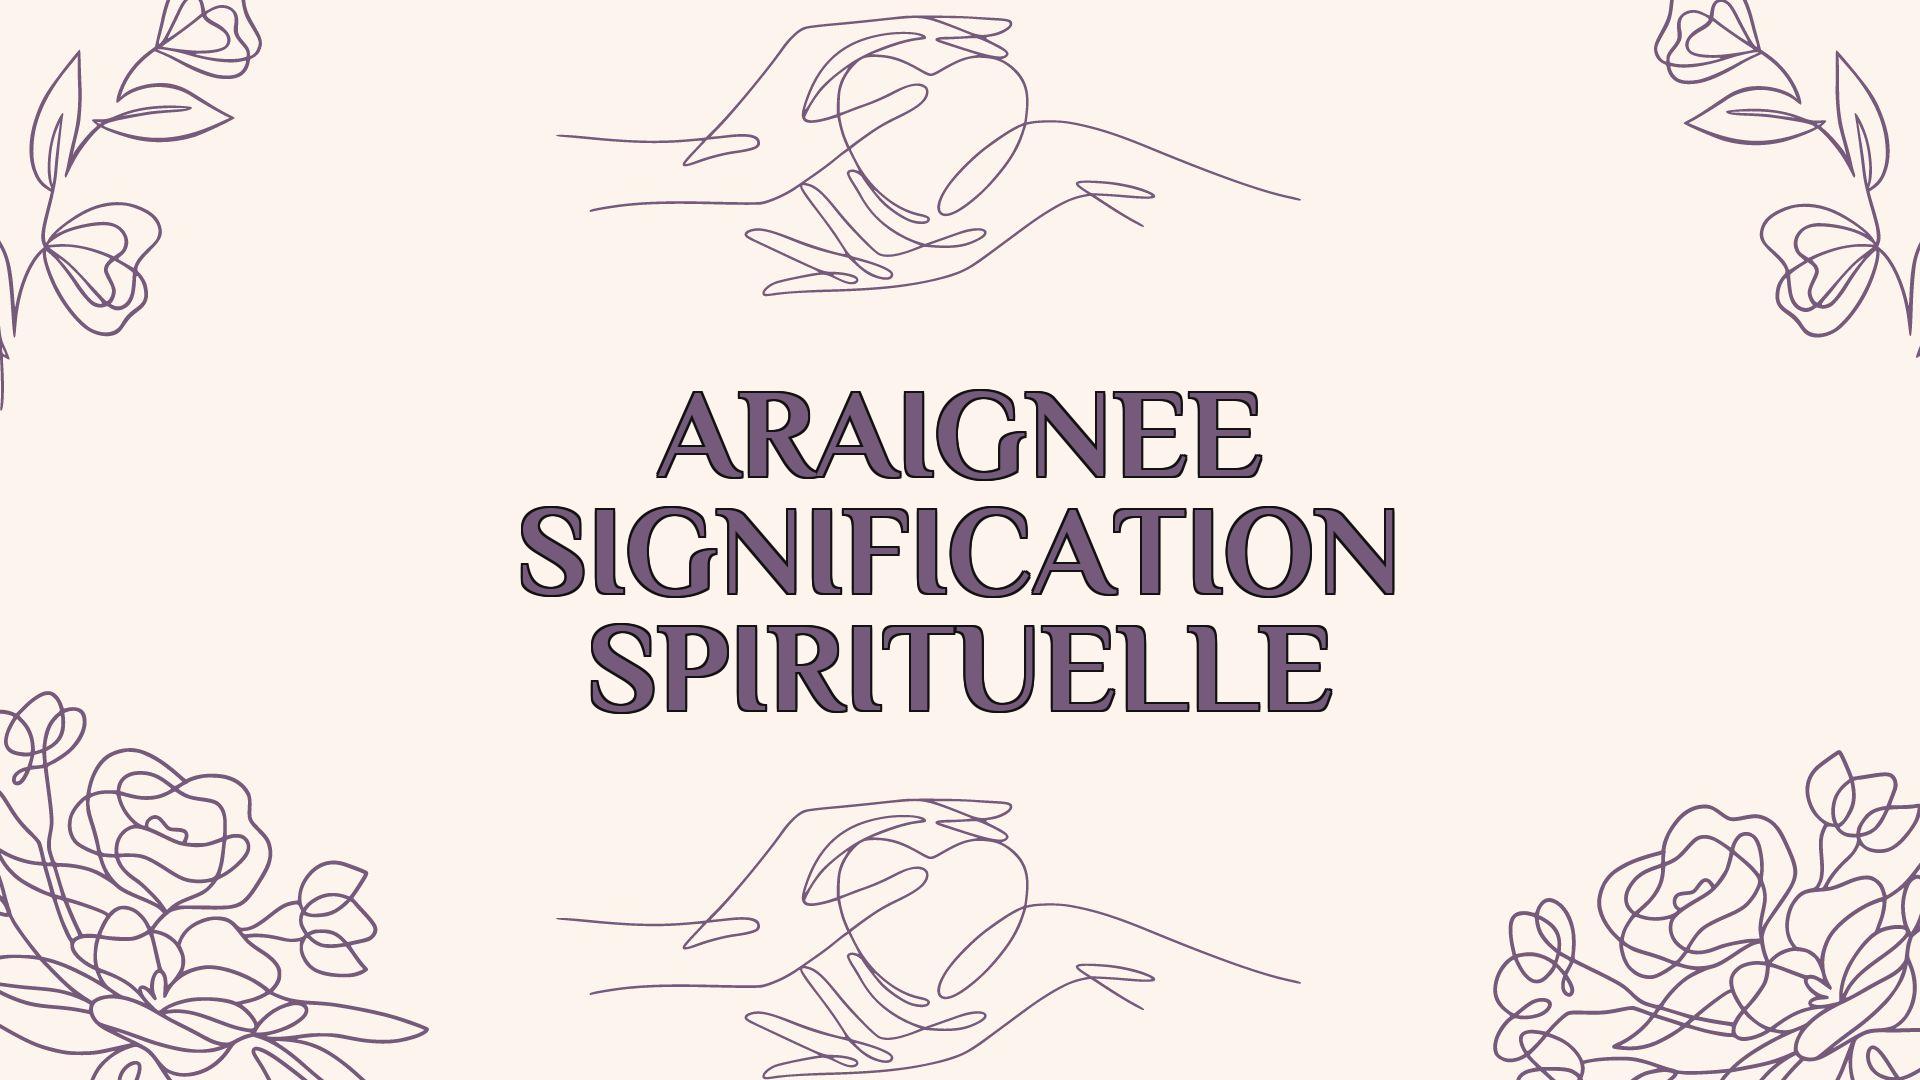 araignee signification spirituelle